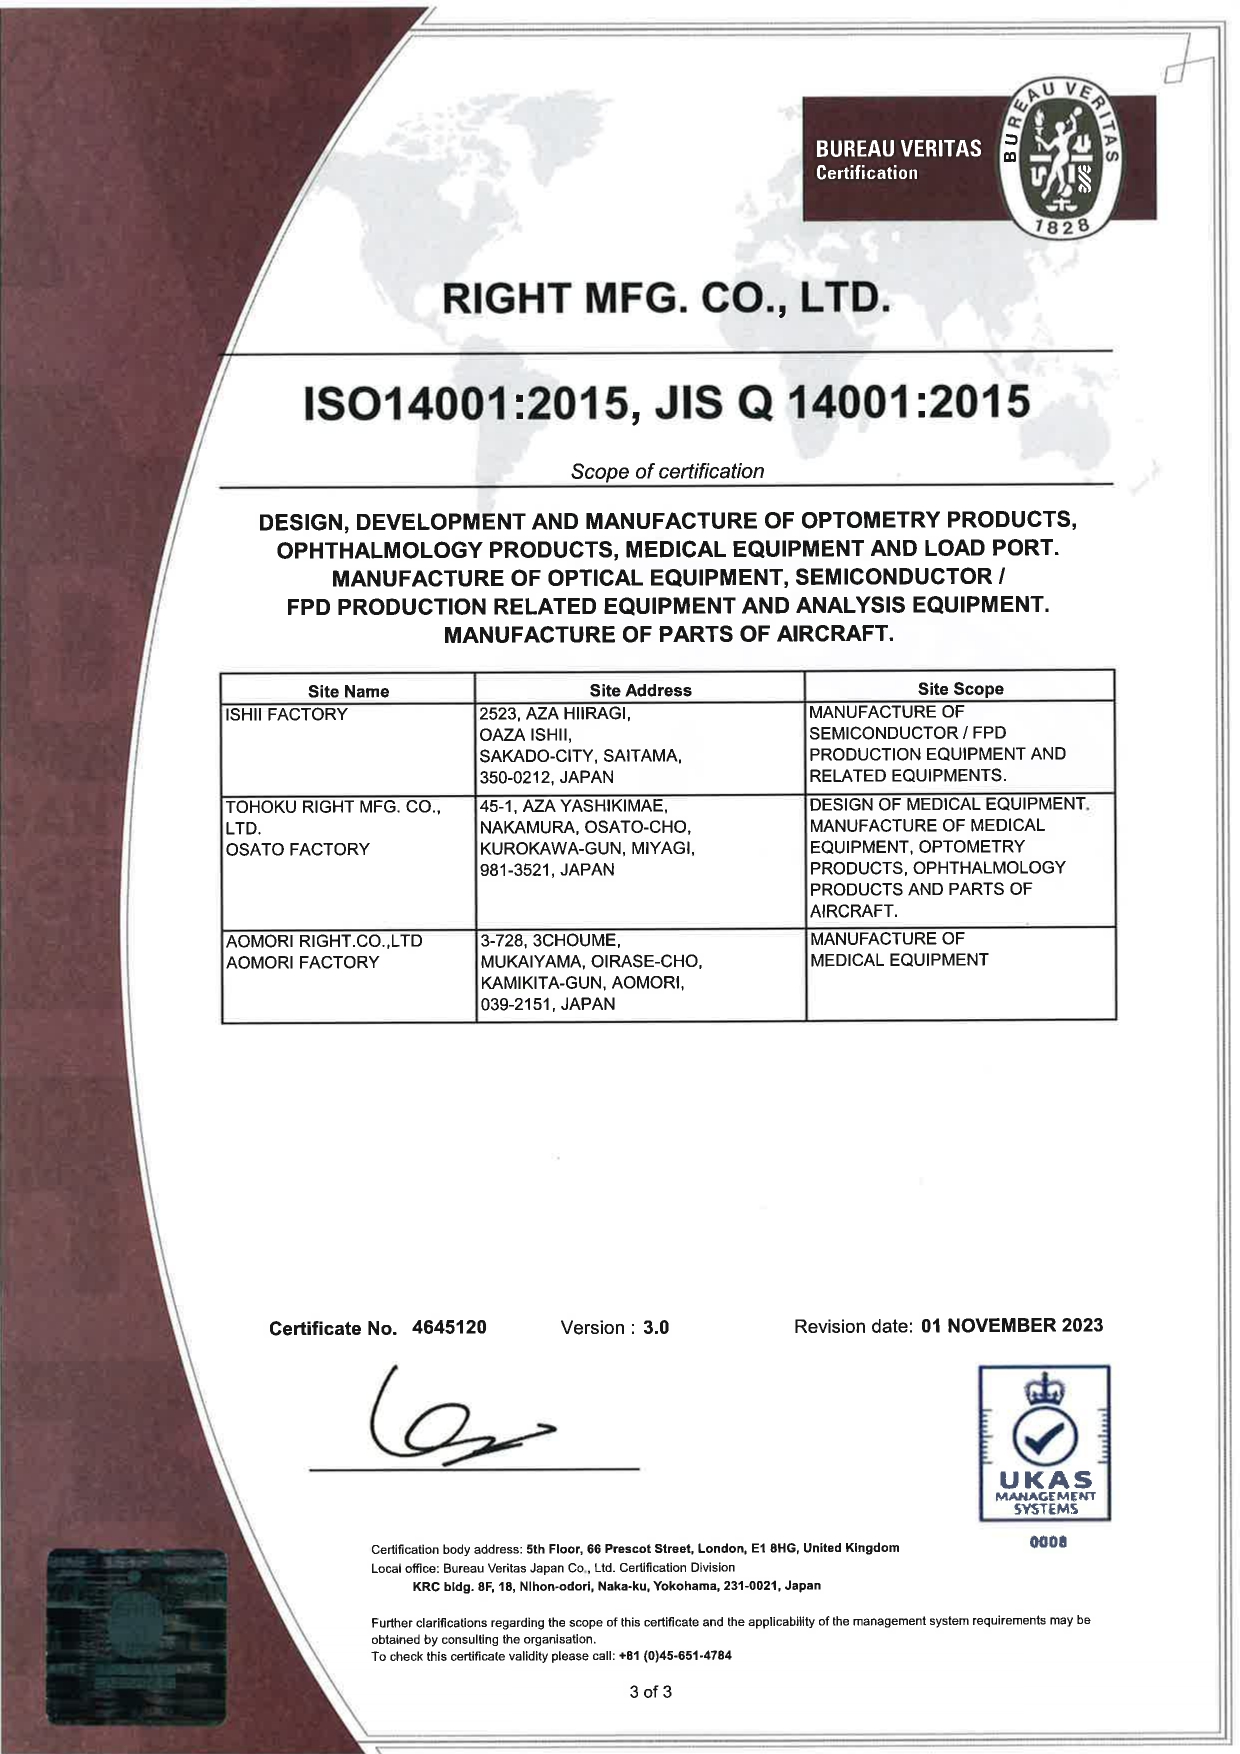 ISO14001 認証取得